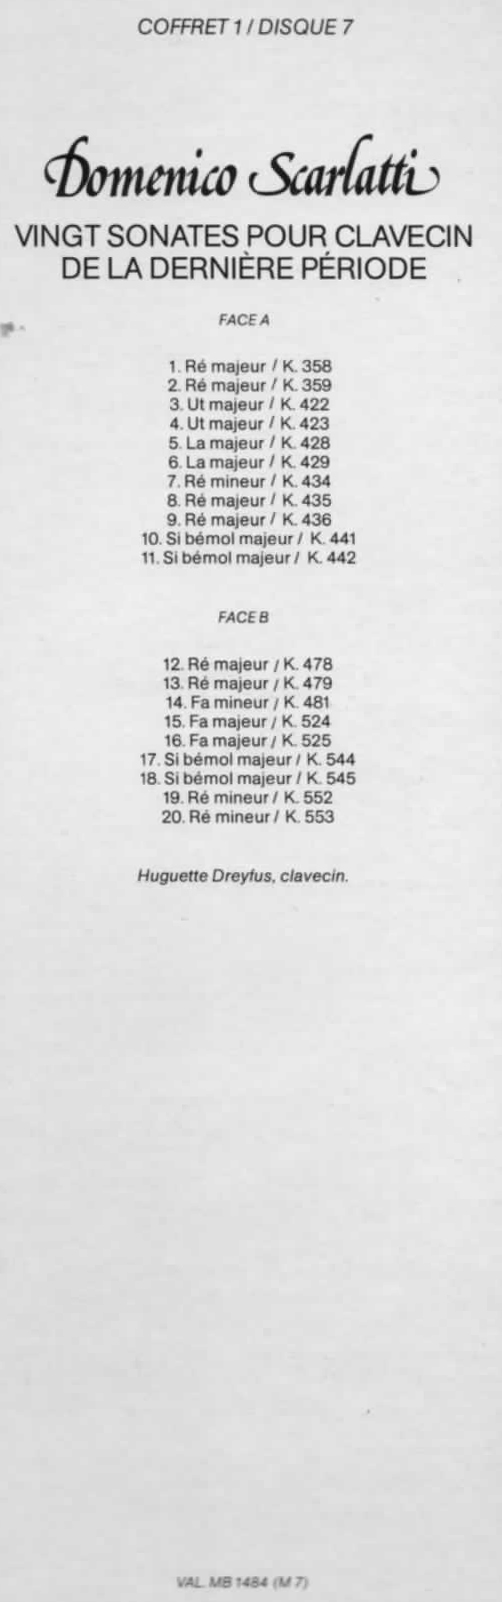 Domenico Scarlatti: discographie sélective - Page 6 Dreyfu10